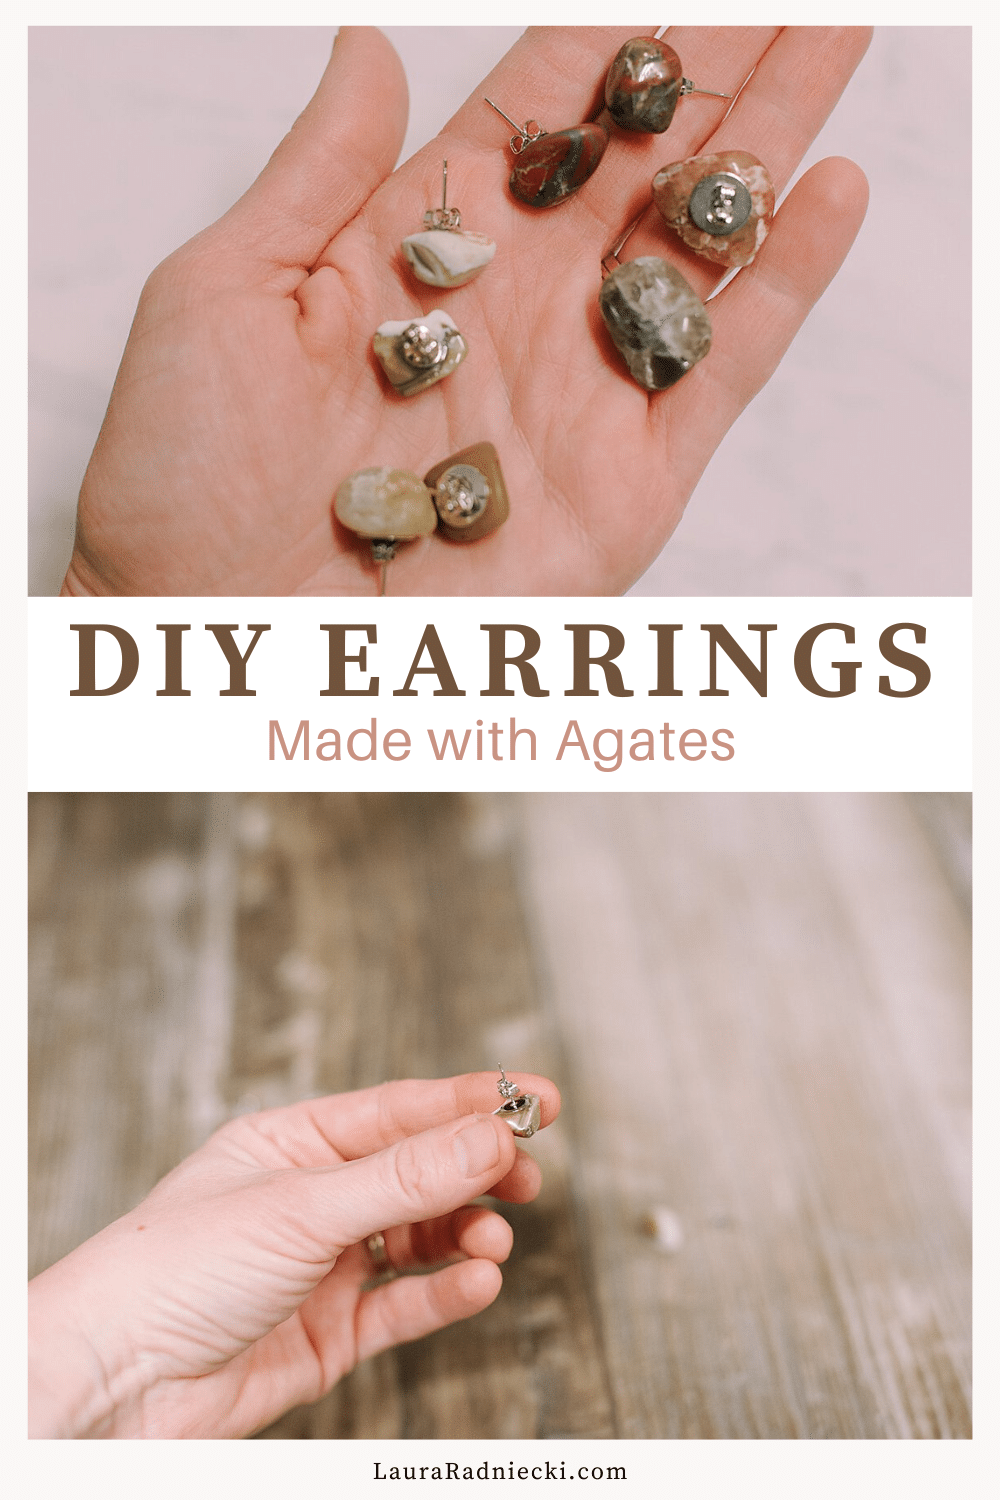 How to Make Agate Earrings